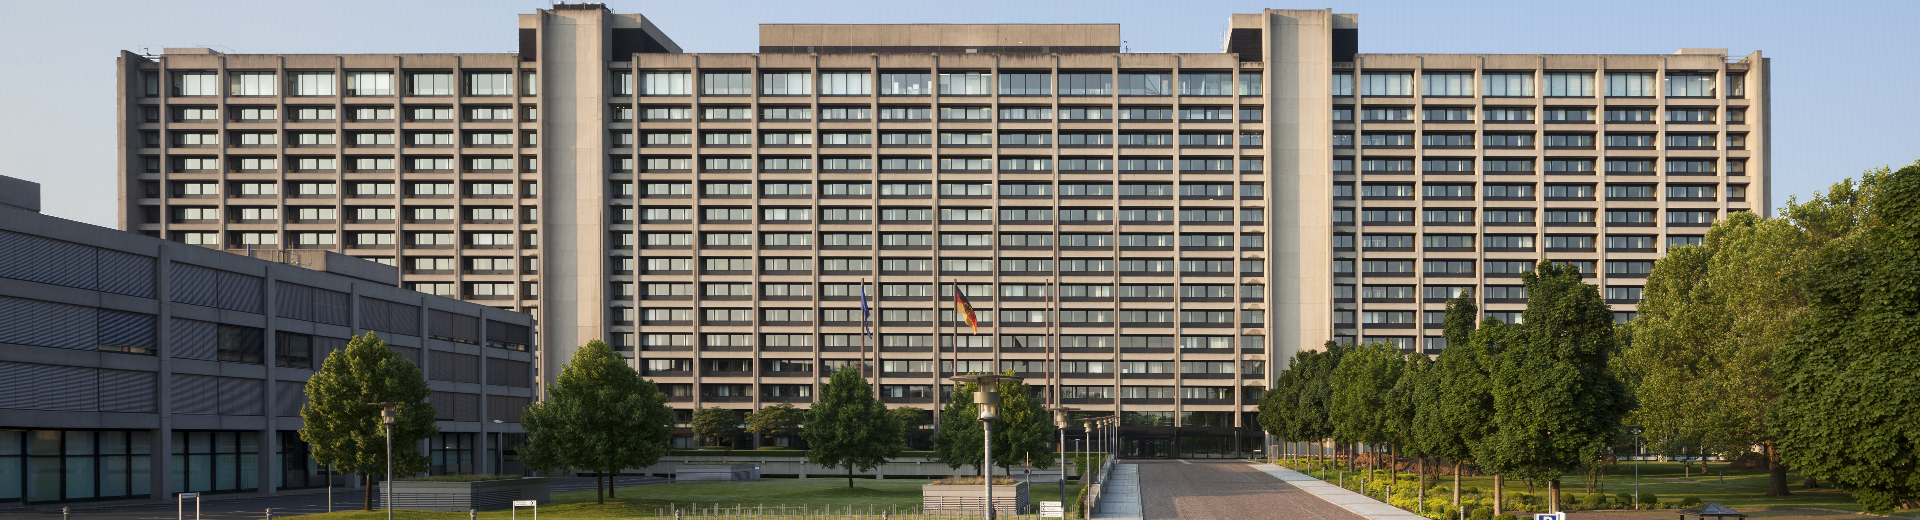 Deutsche Bundesbank Frankfurt